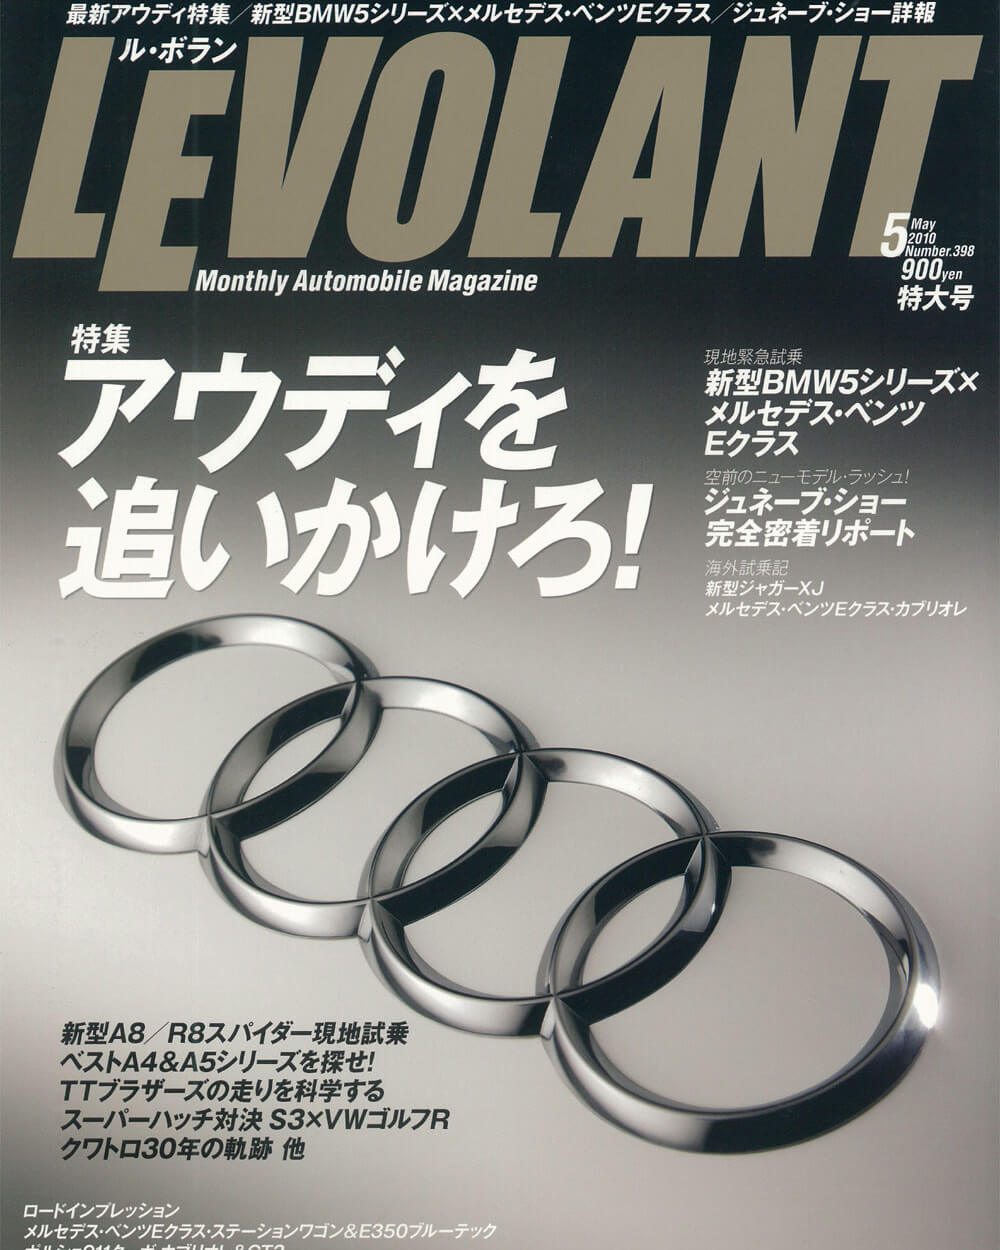 LEVOLANT May issue